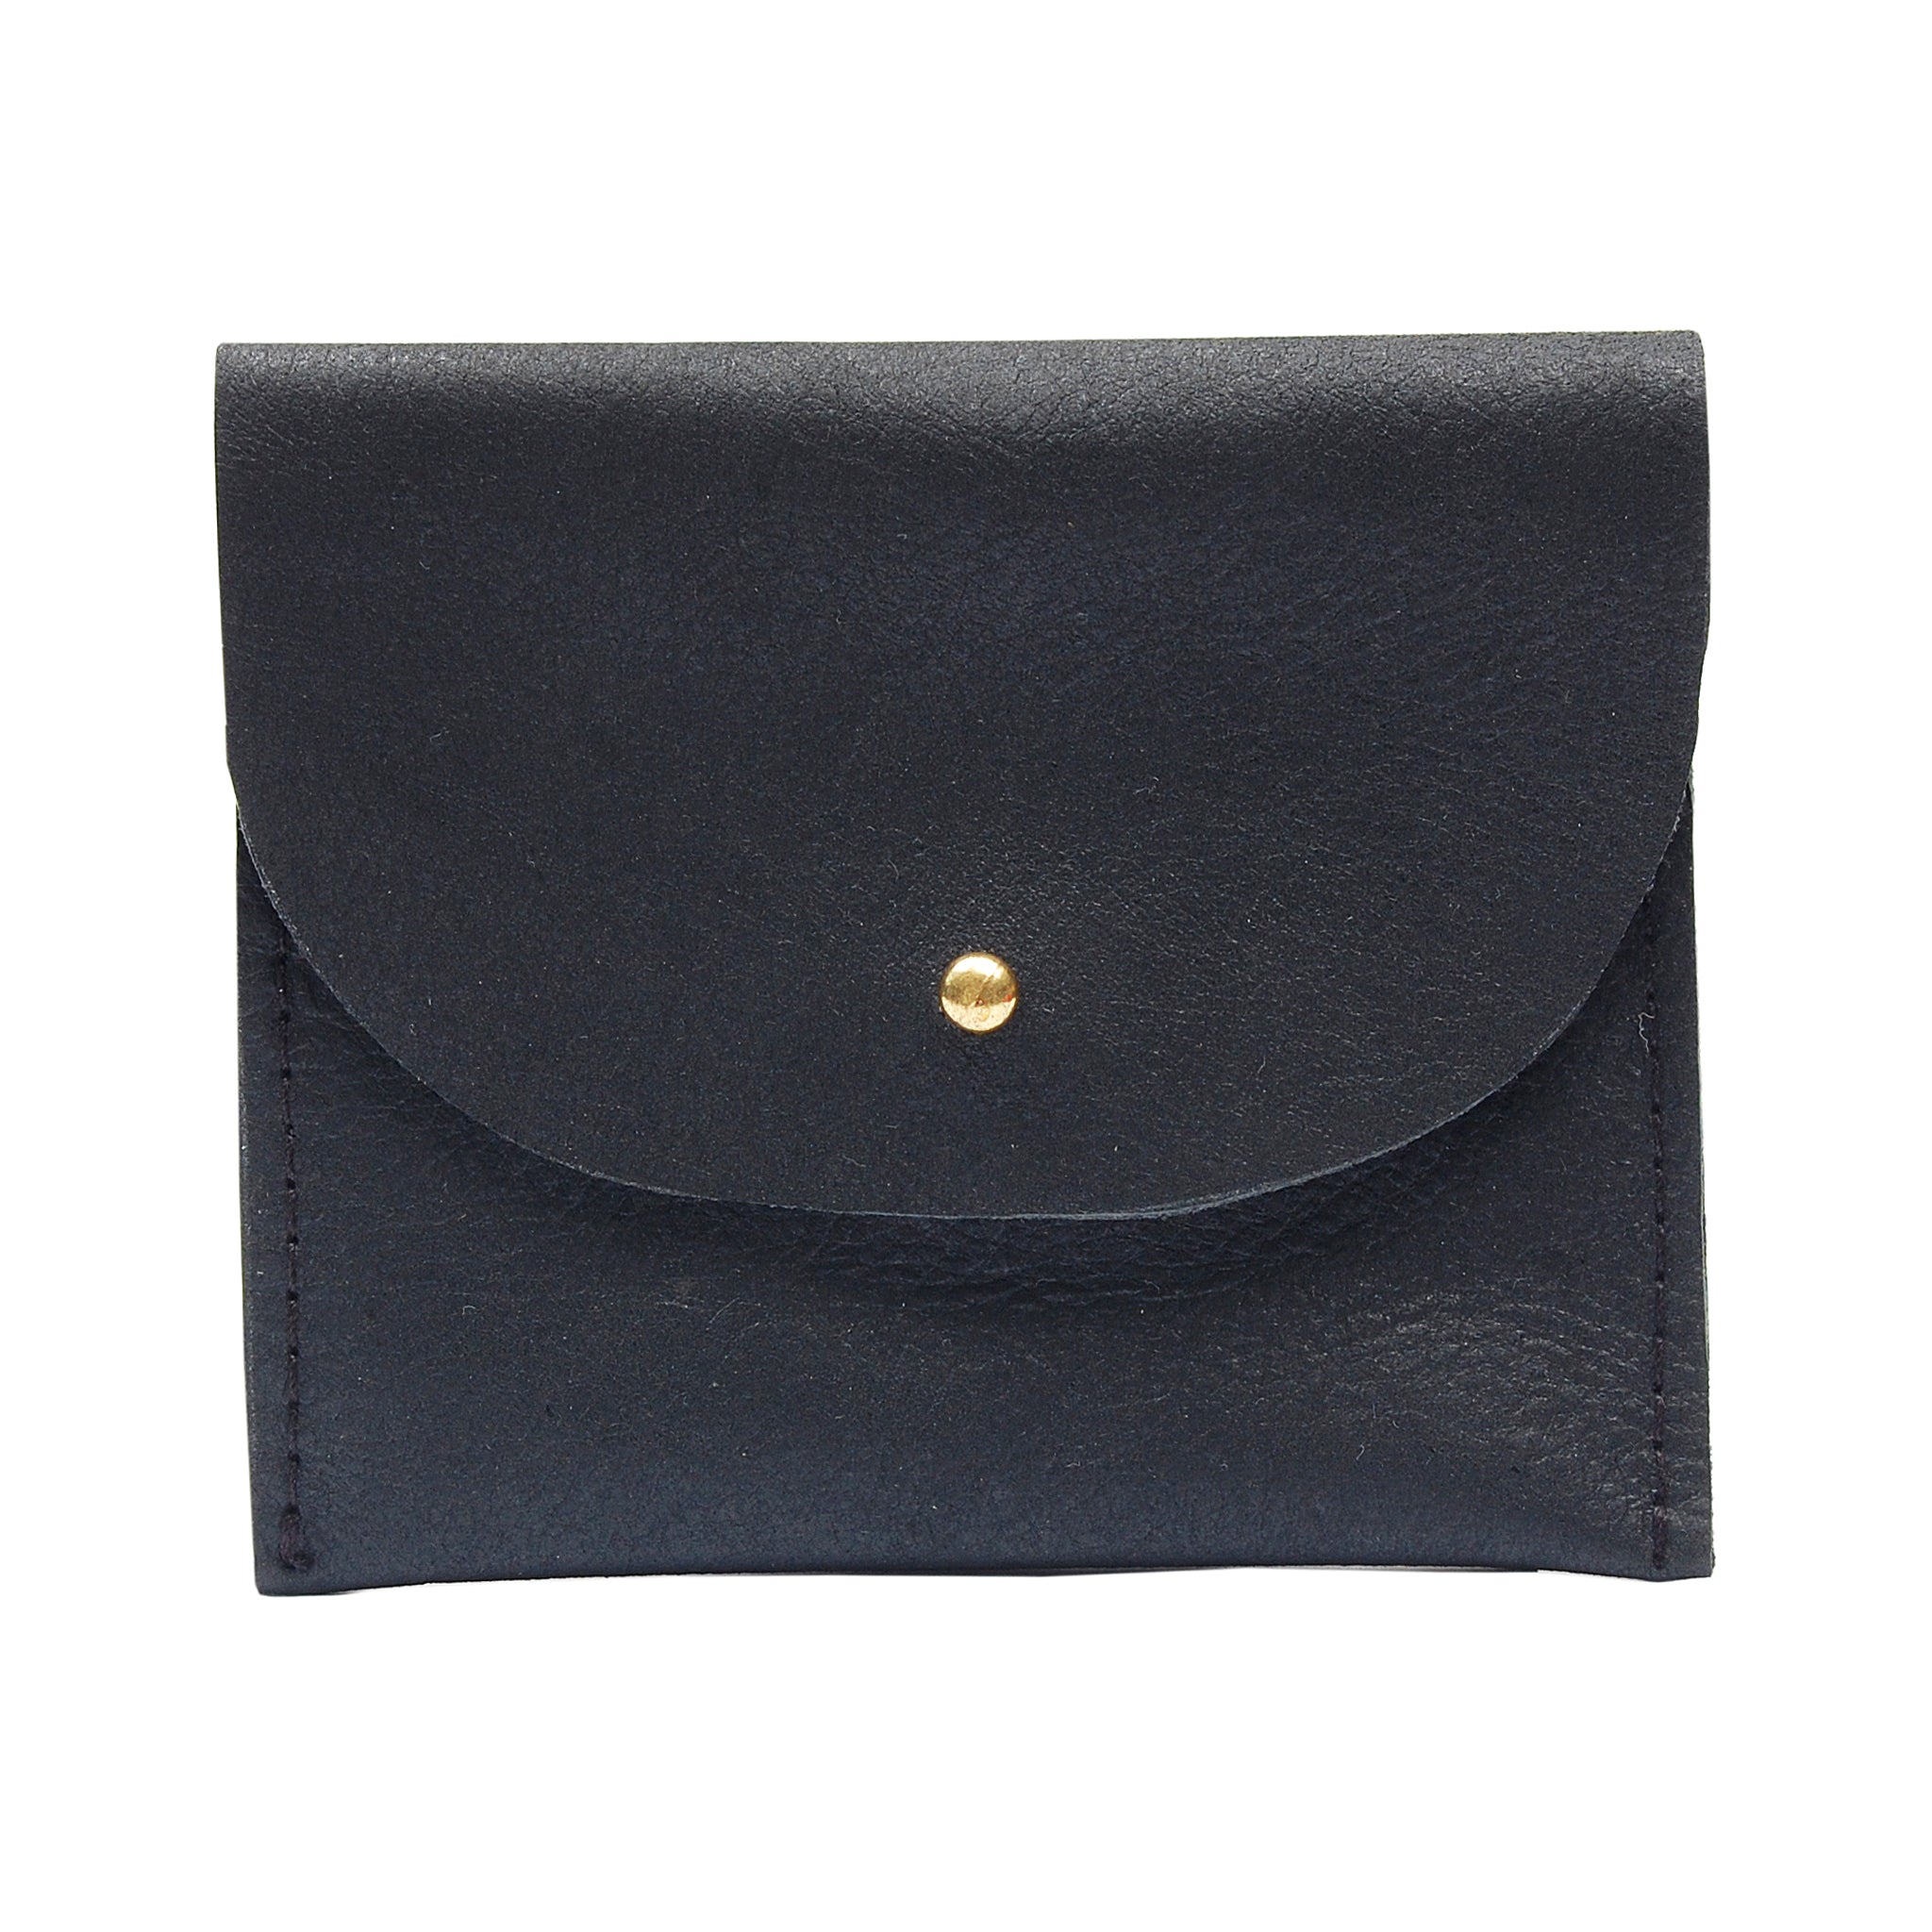 Women's black leather credit card purse